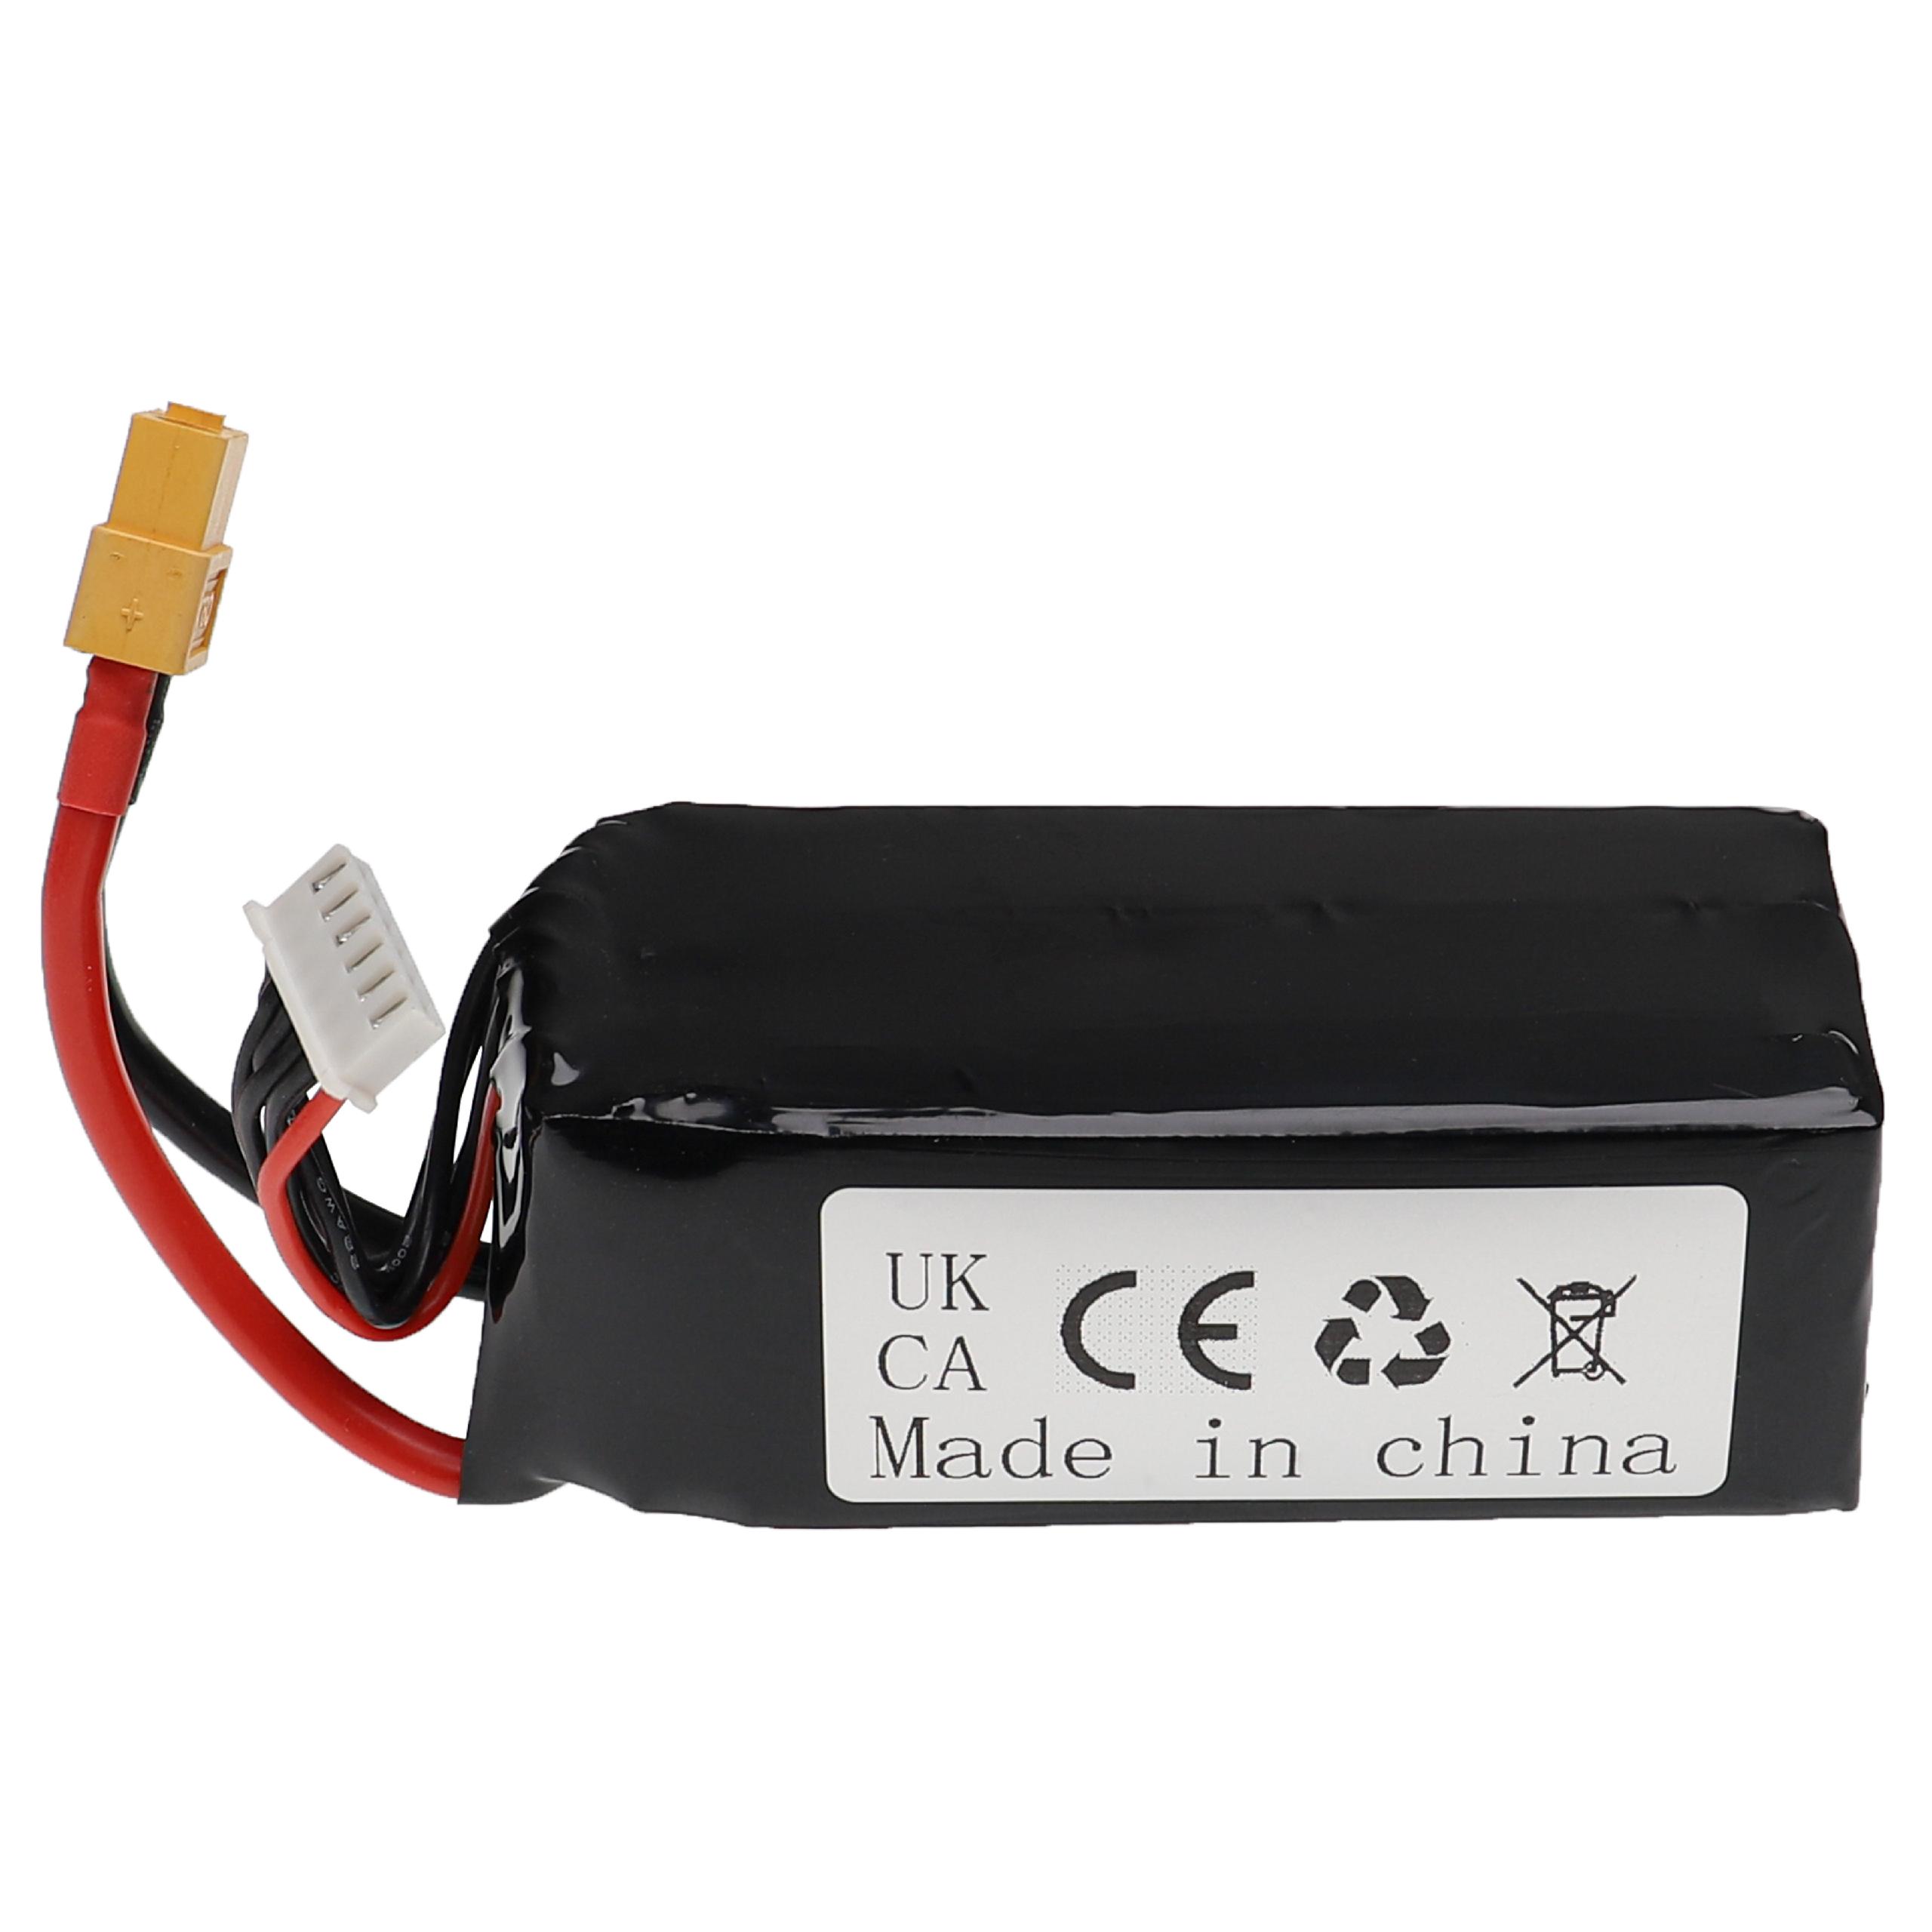 Akumulator do modeli zdalnie sterowanych RC - 1800 mAh 18,5 V LiPo, XT60